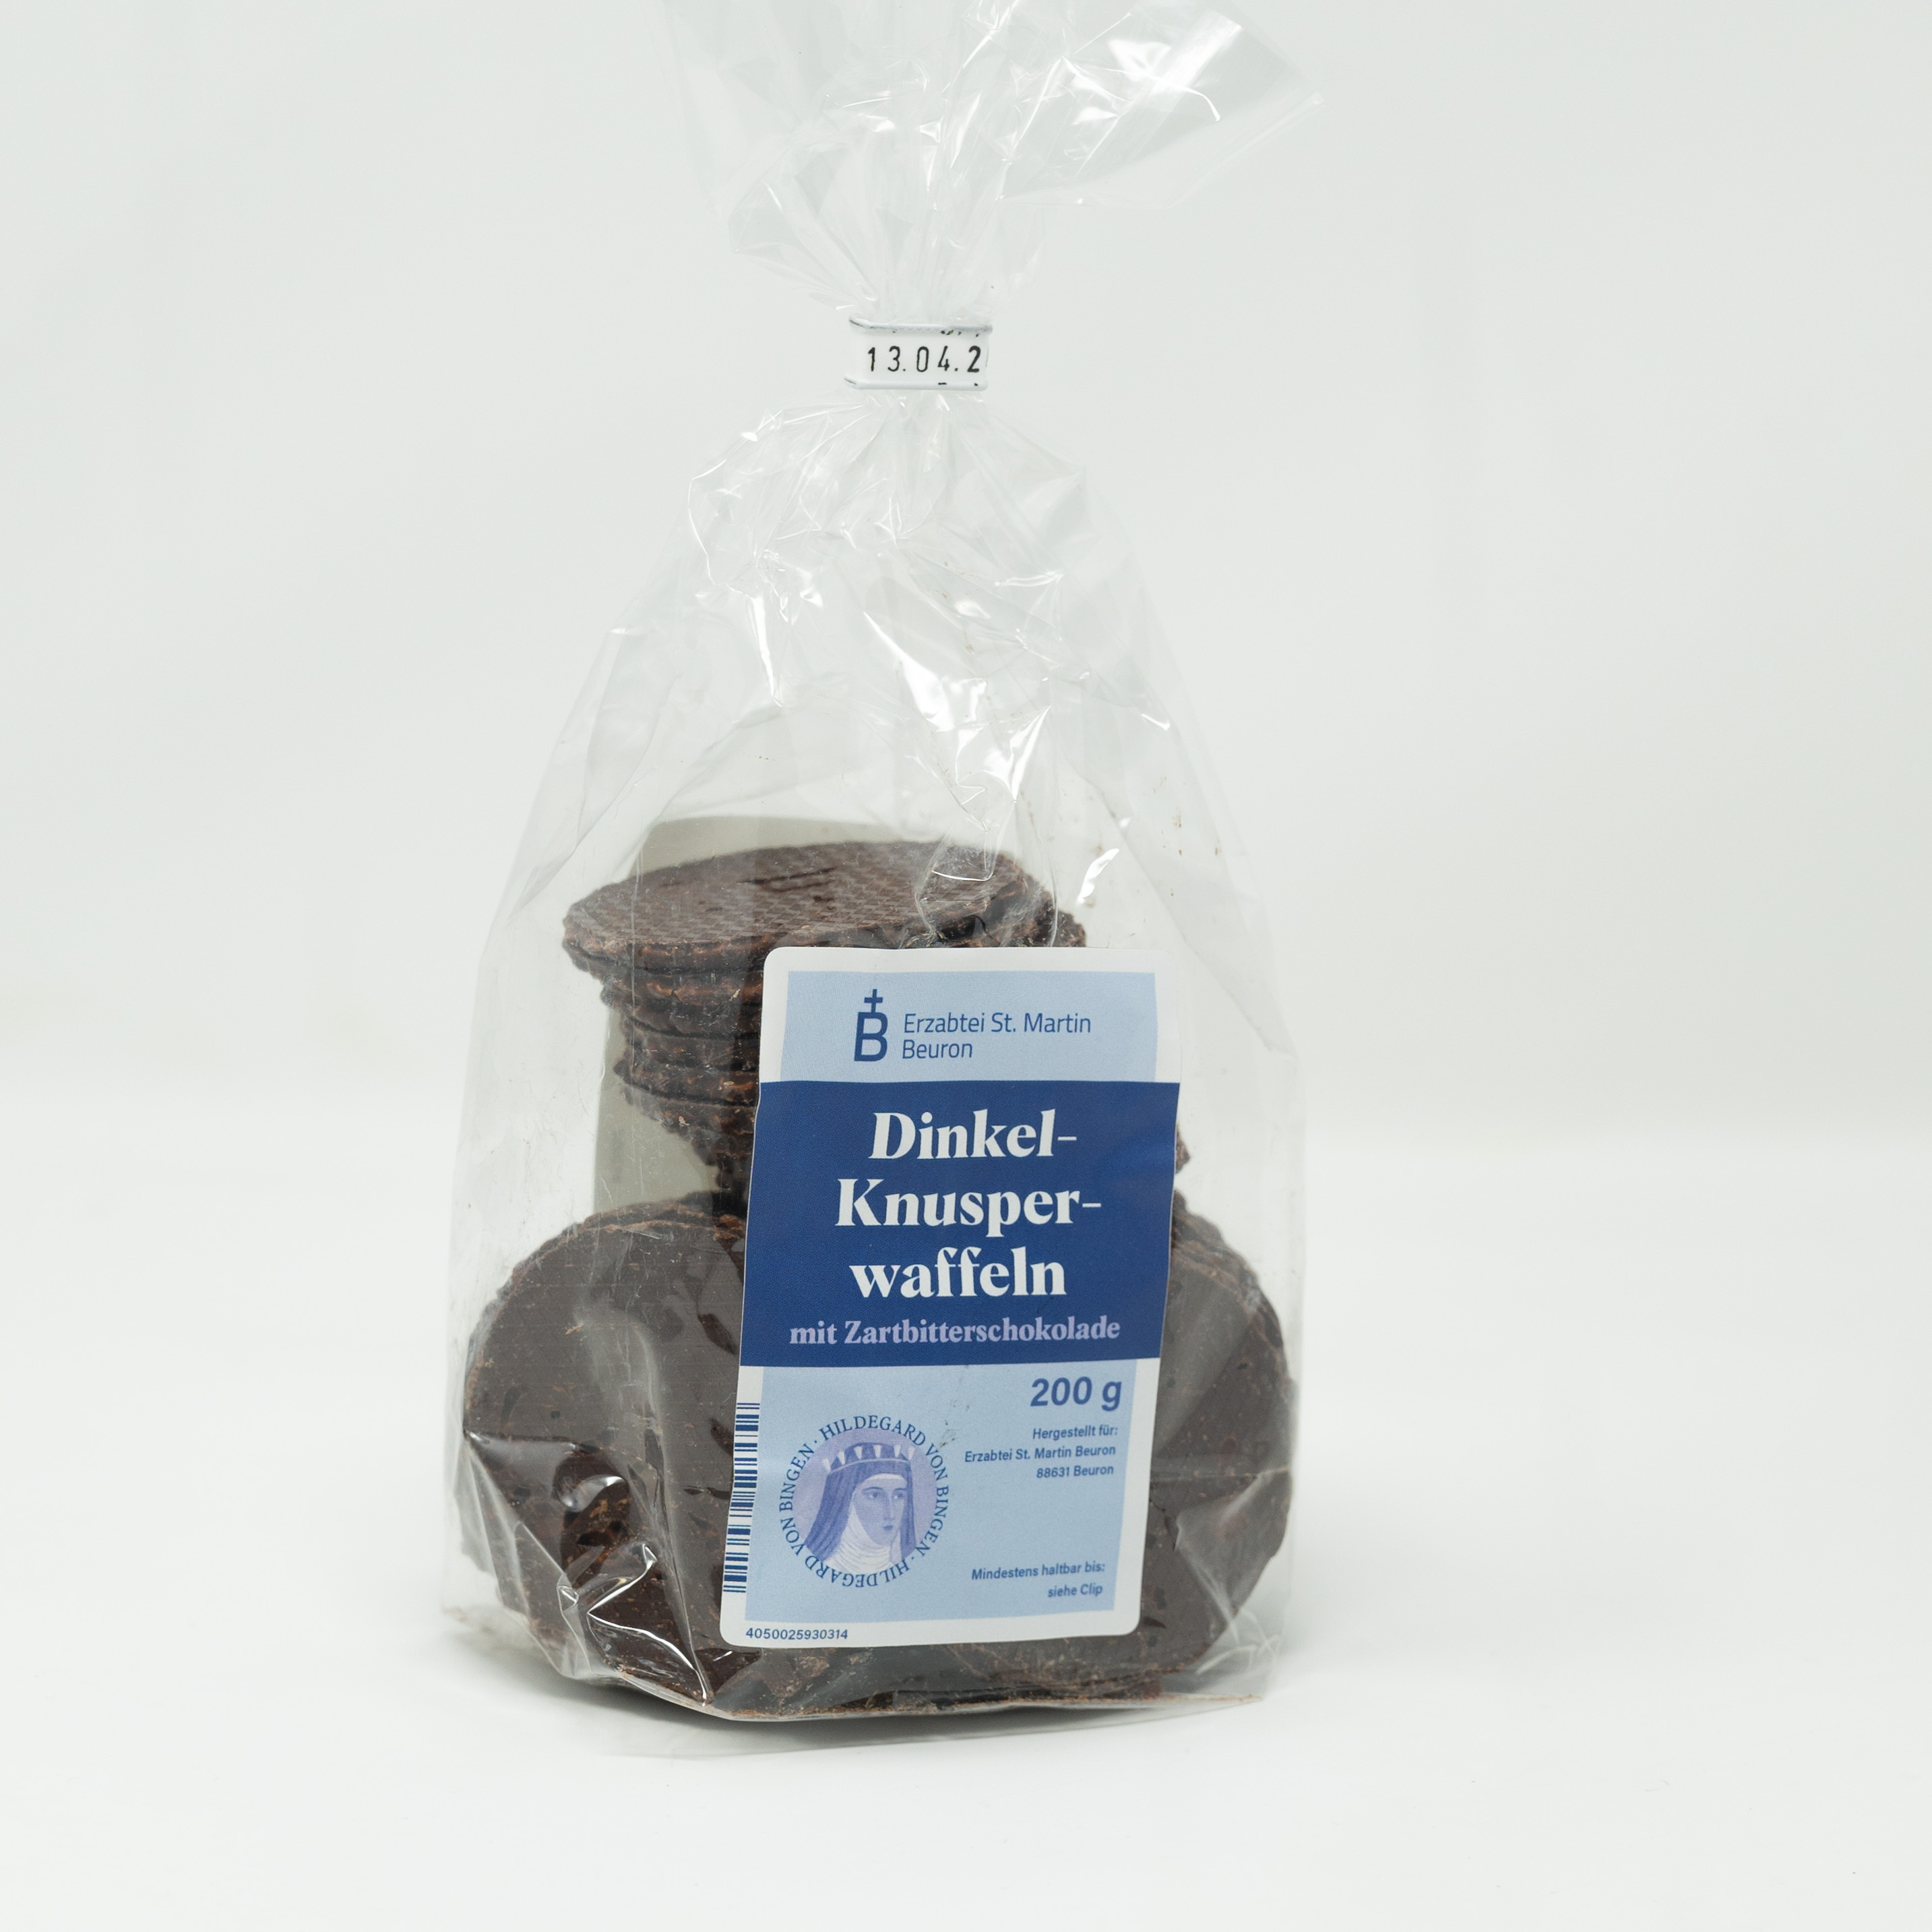 Dinkel-Knusperwaffeln "Zartbitterschokolade"